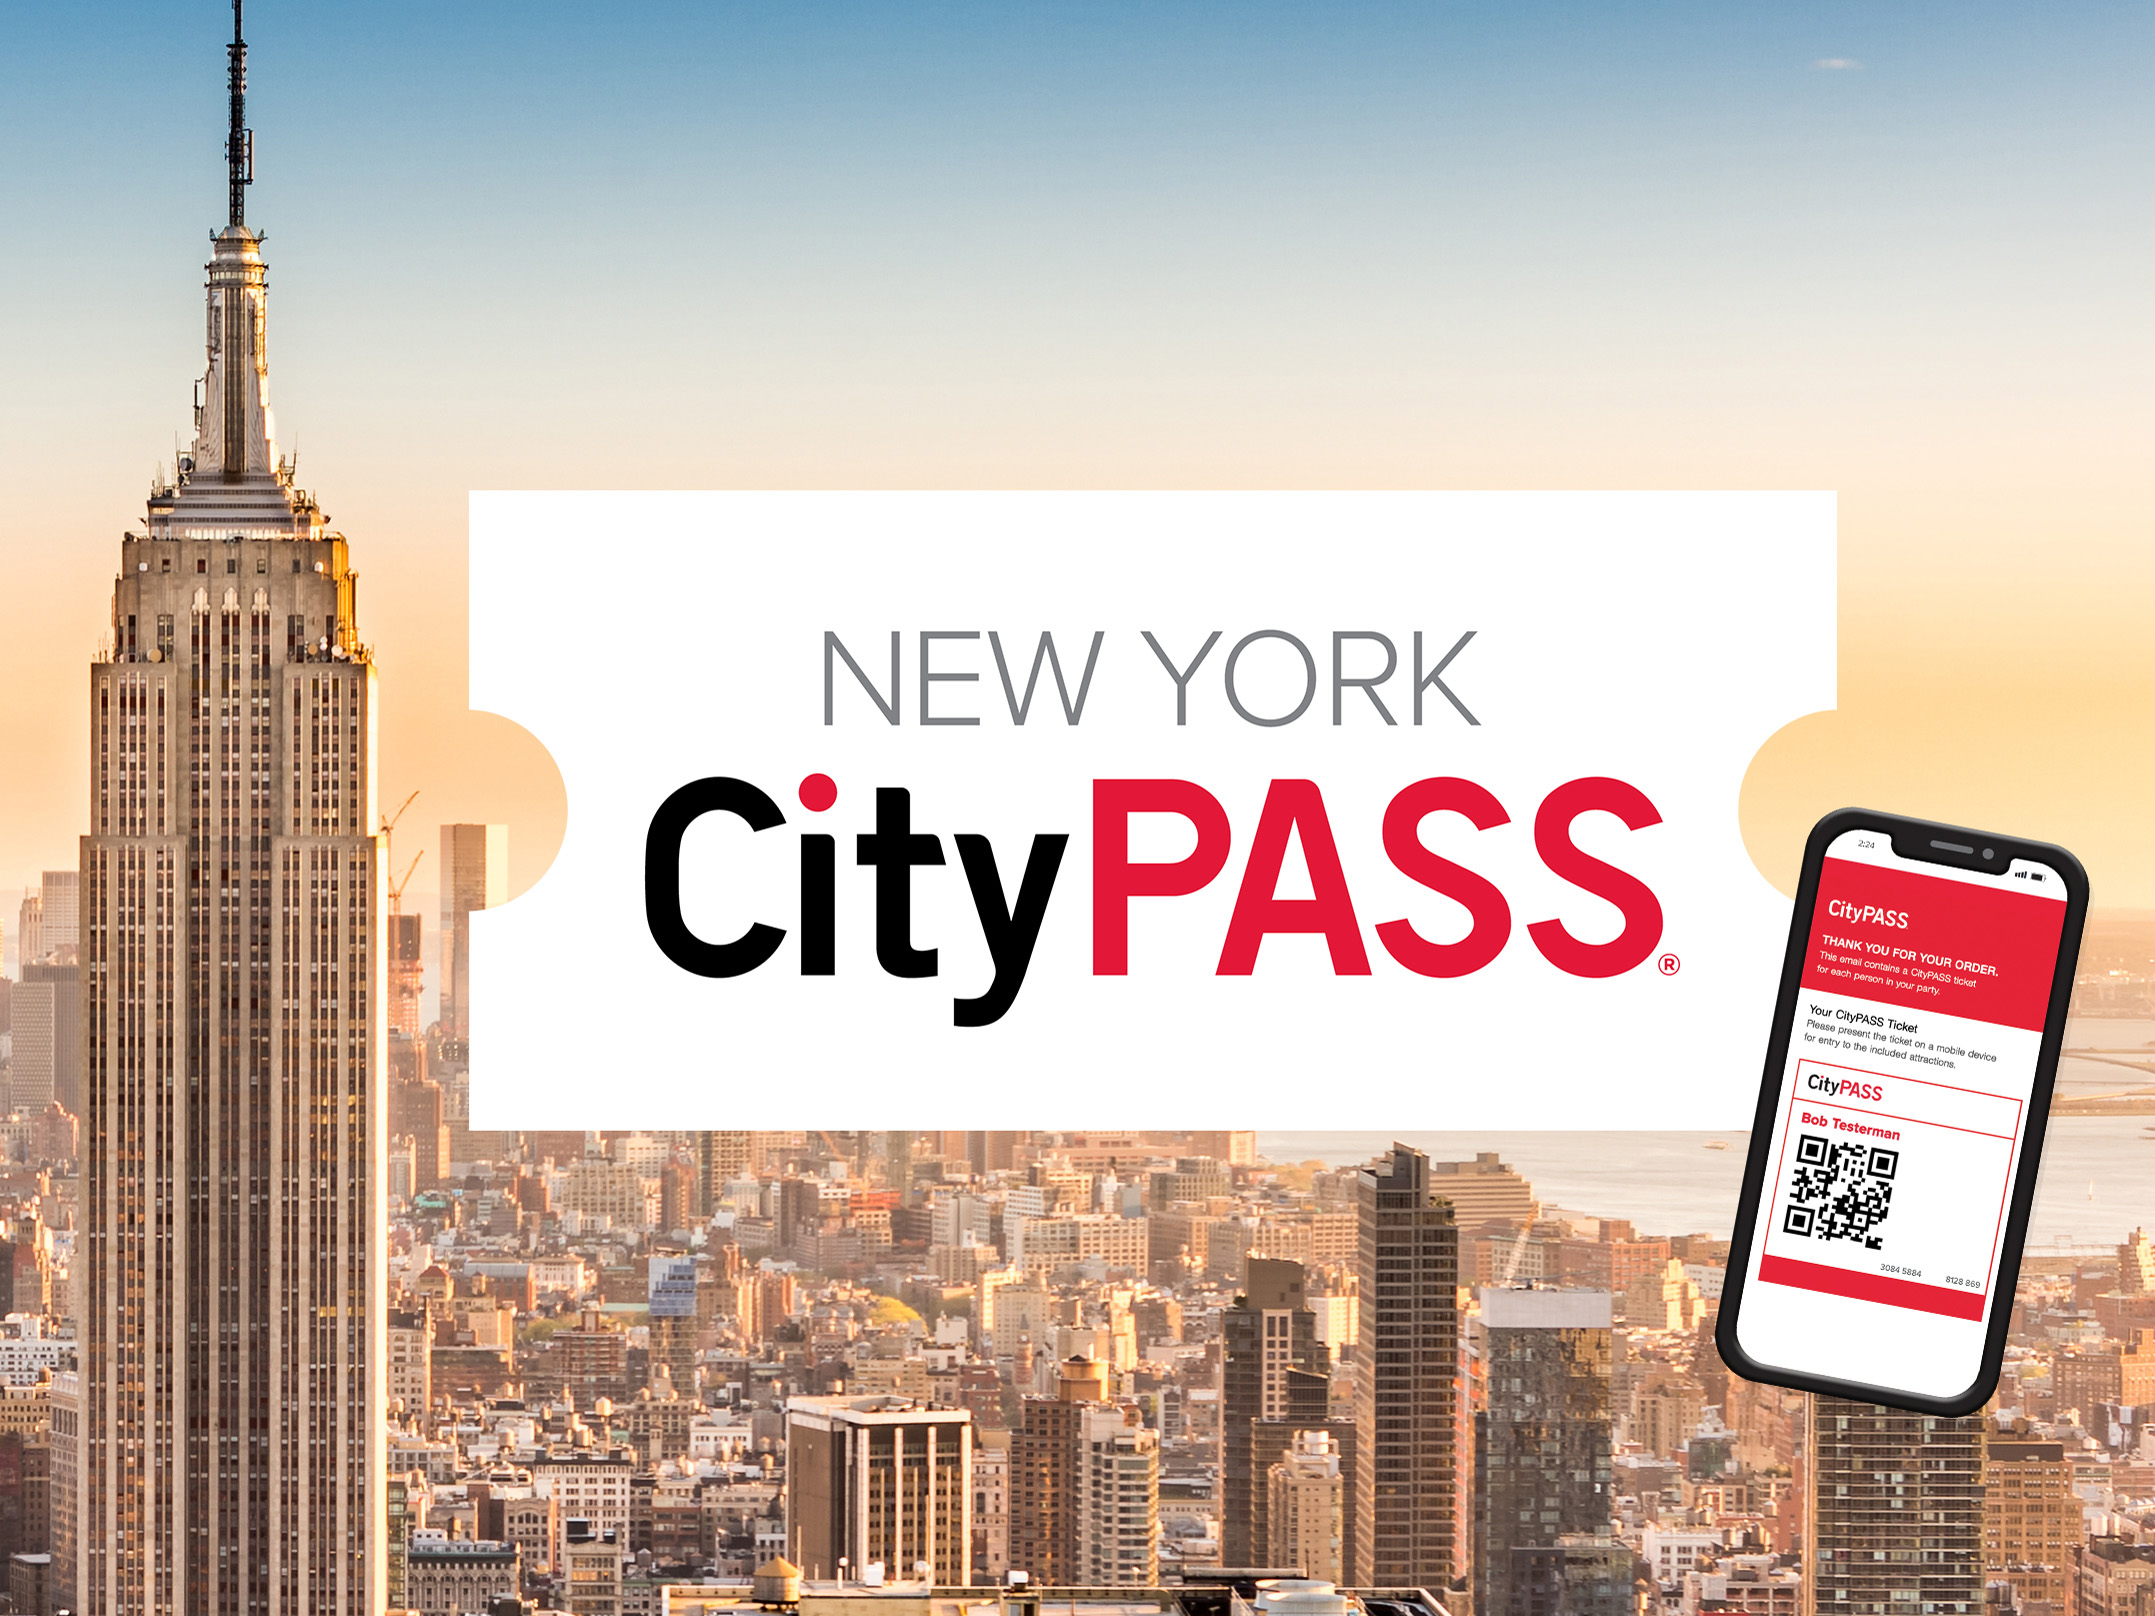 New York City Pass | AttractionTickets.com